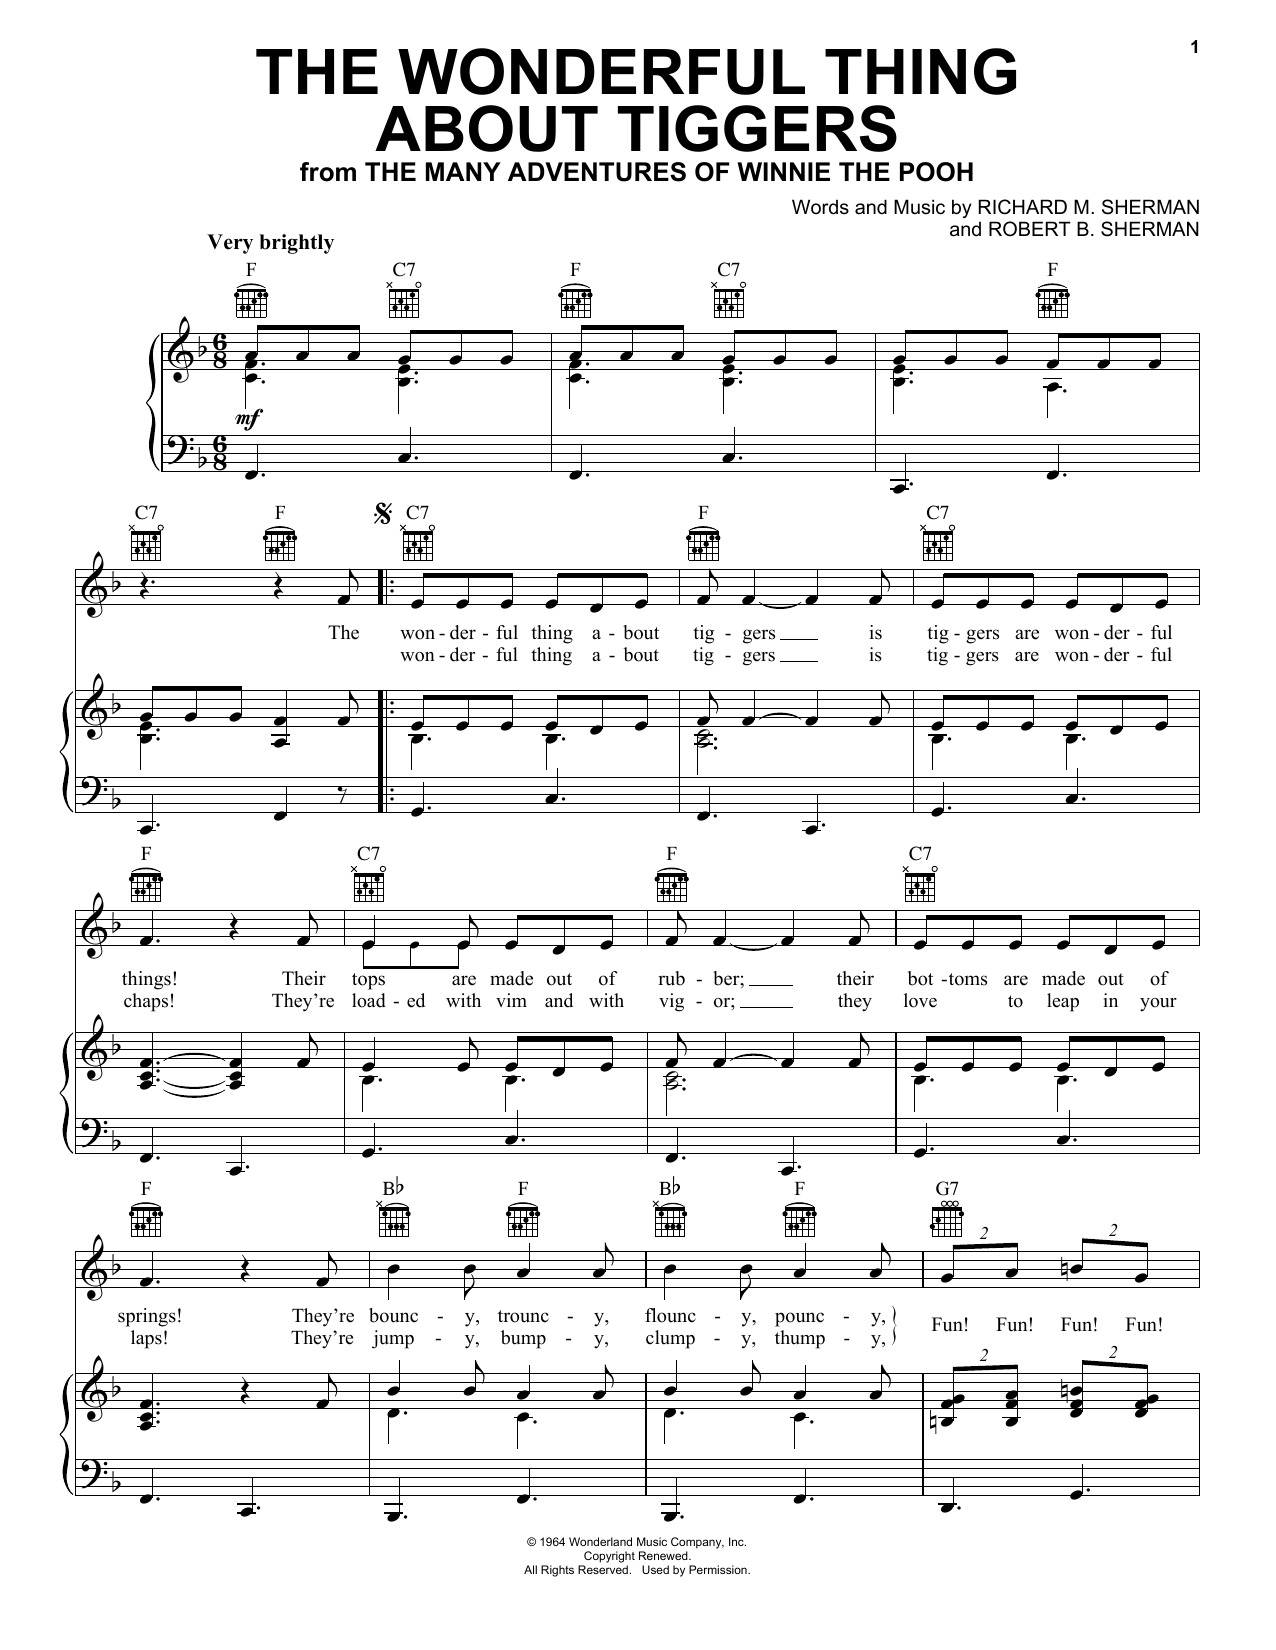 Richard & Robert Sherman The Wonderful Thing About Tiggers Sheet Music Notes & Chords for Trombone - Download or Print PDF